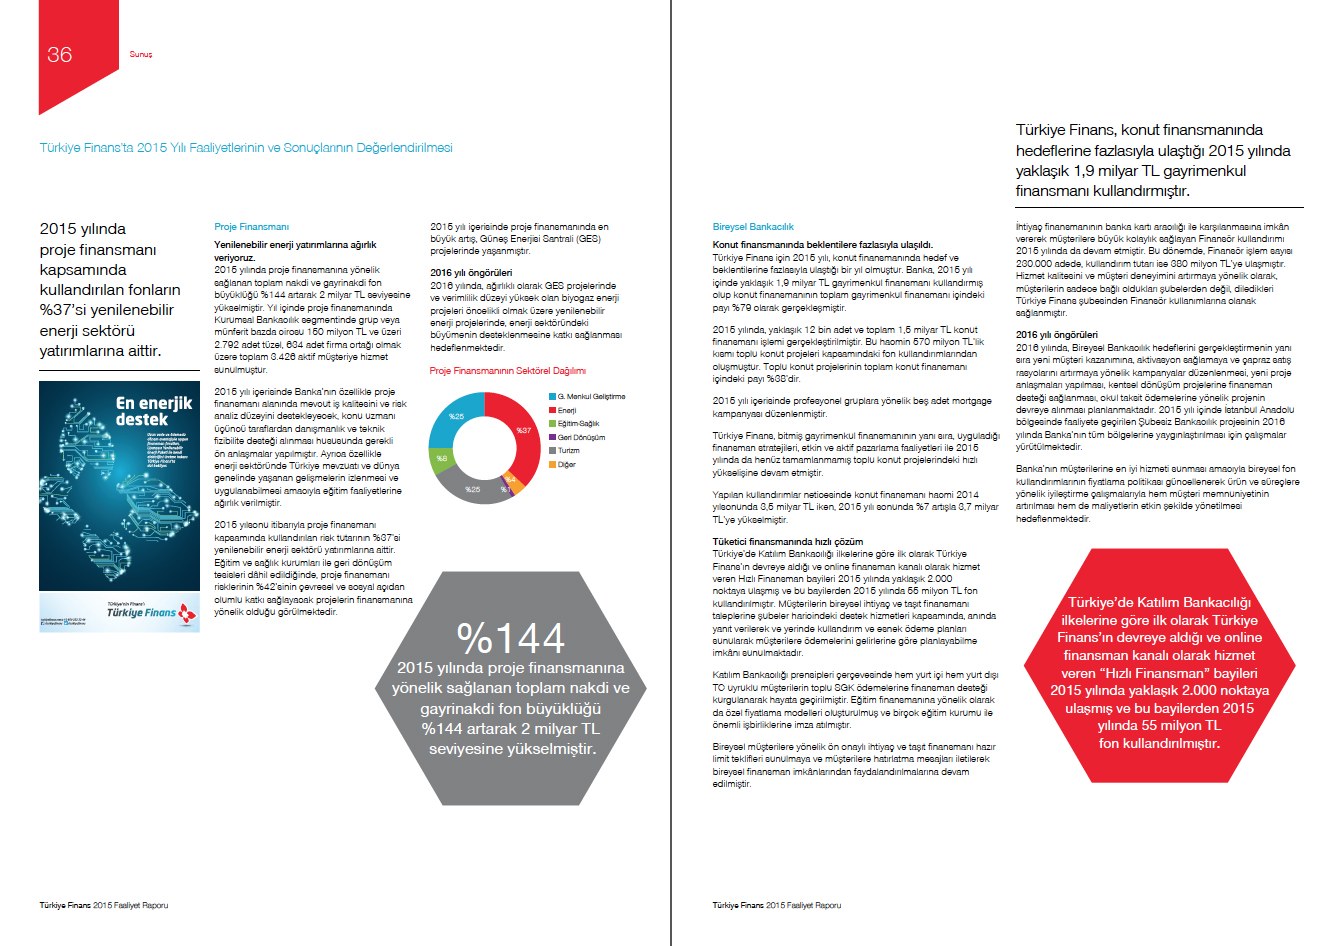 TÜRKİYE FİNANS / 2015 Faaliyet Raporu / 2015 Annual Report